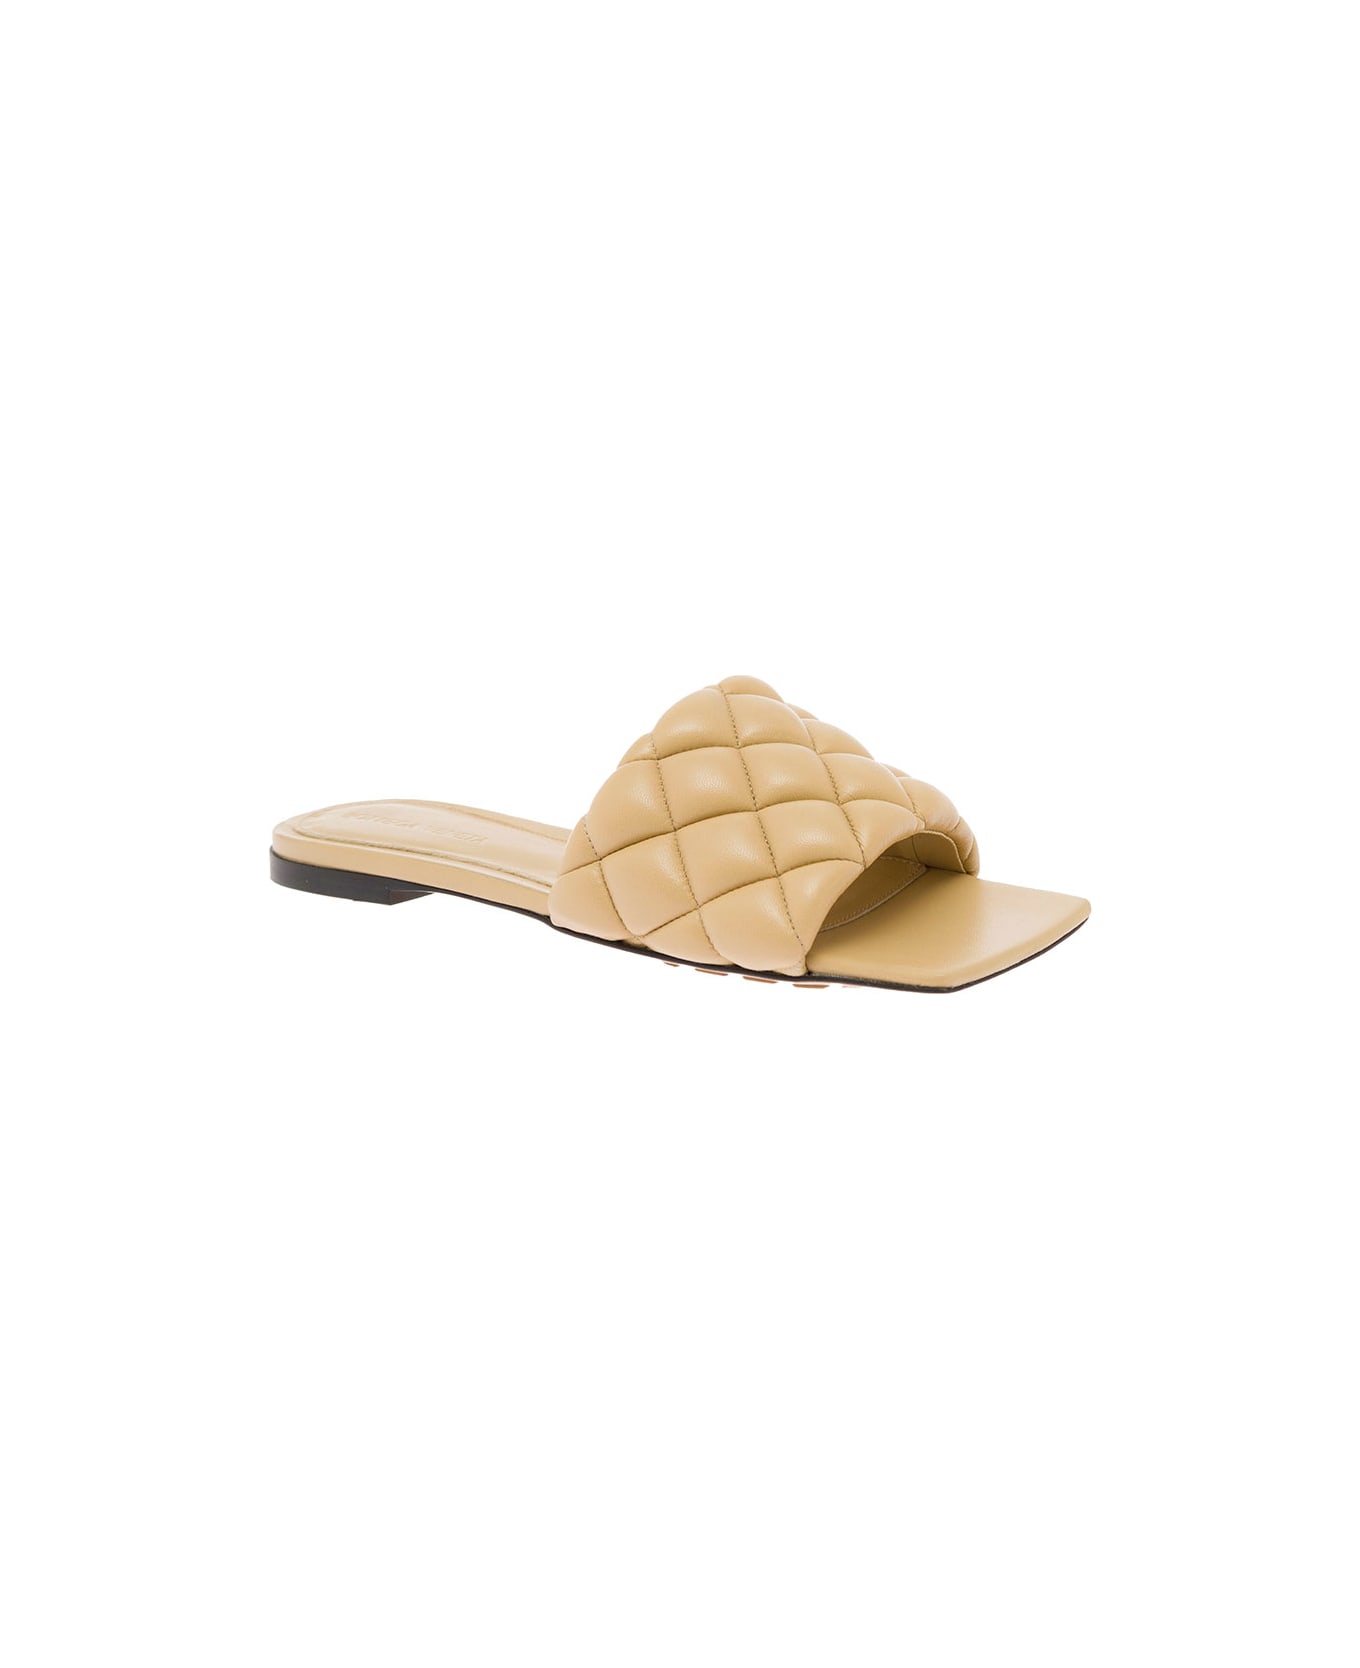 Bottega Veneta Beige Quilted Leather Slide Sandals Bottega Veneta Woman - Beige